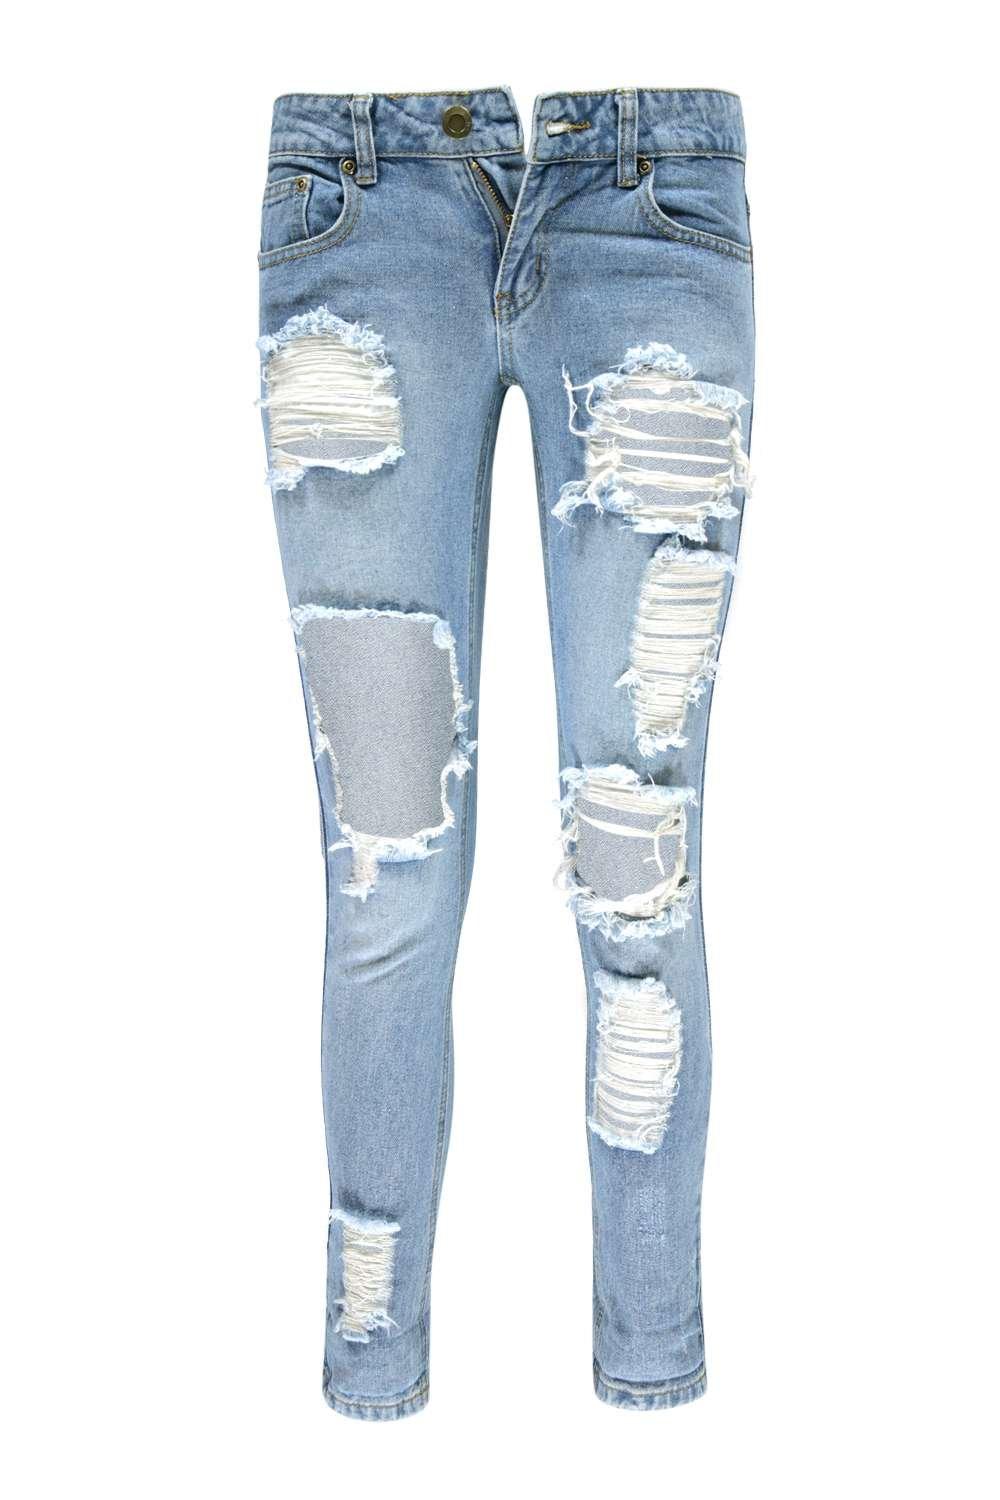 boohoo distressed jeans